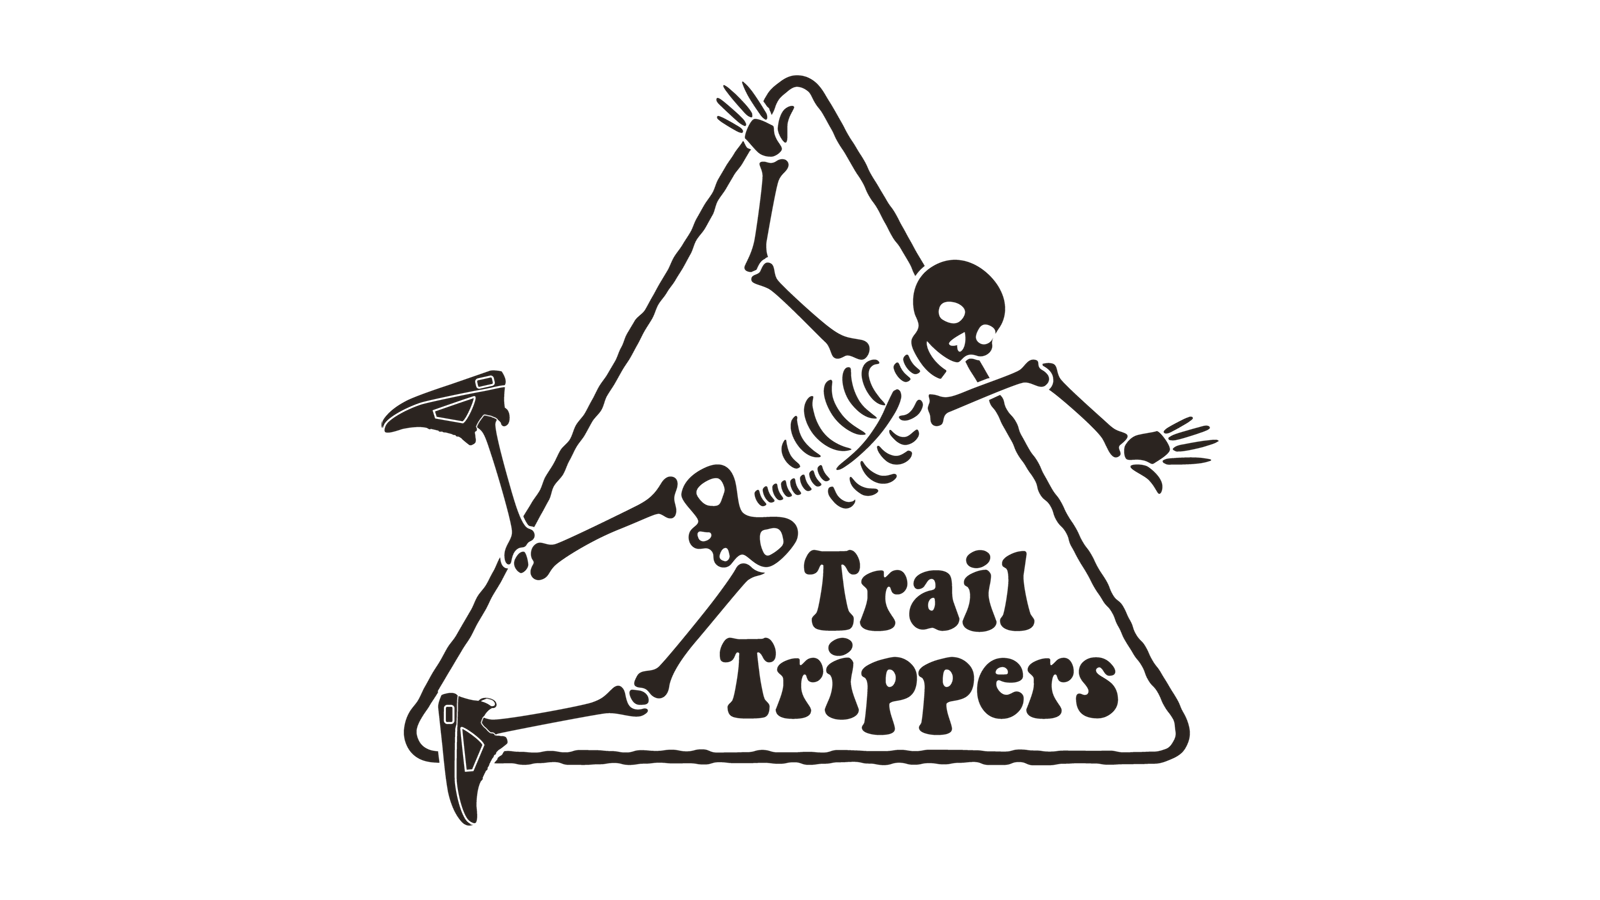 TrailTrippers_Final_LogoAnimation.gif